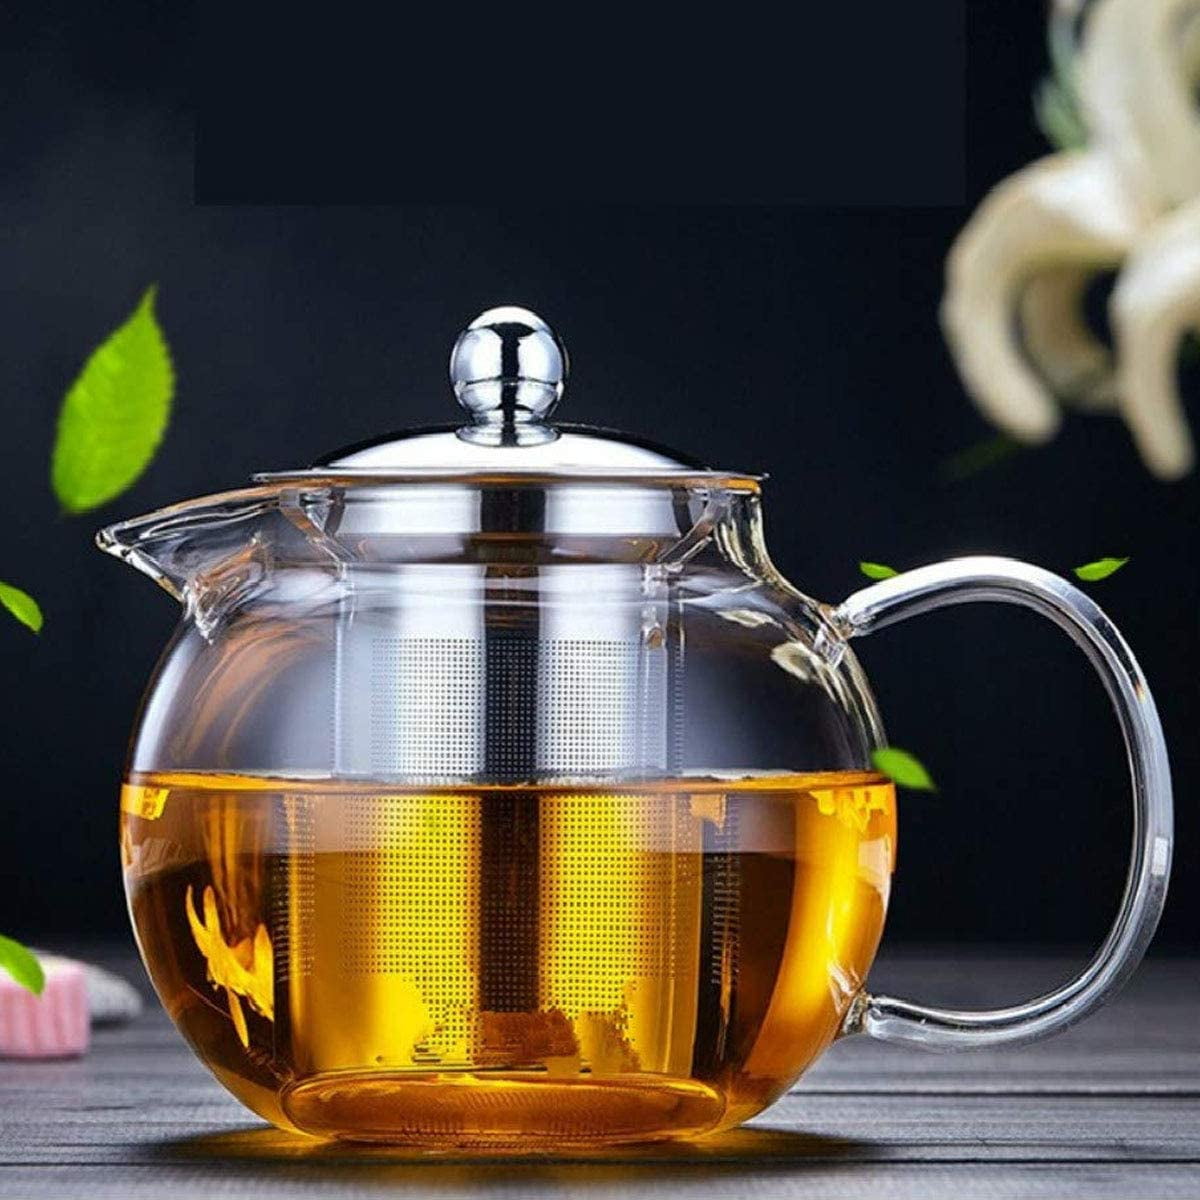 700ml Vintage Tea Pot Clear Glass Teapot with Infuser for Loose Leaf Tea 